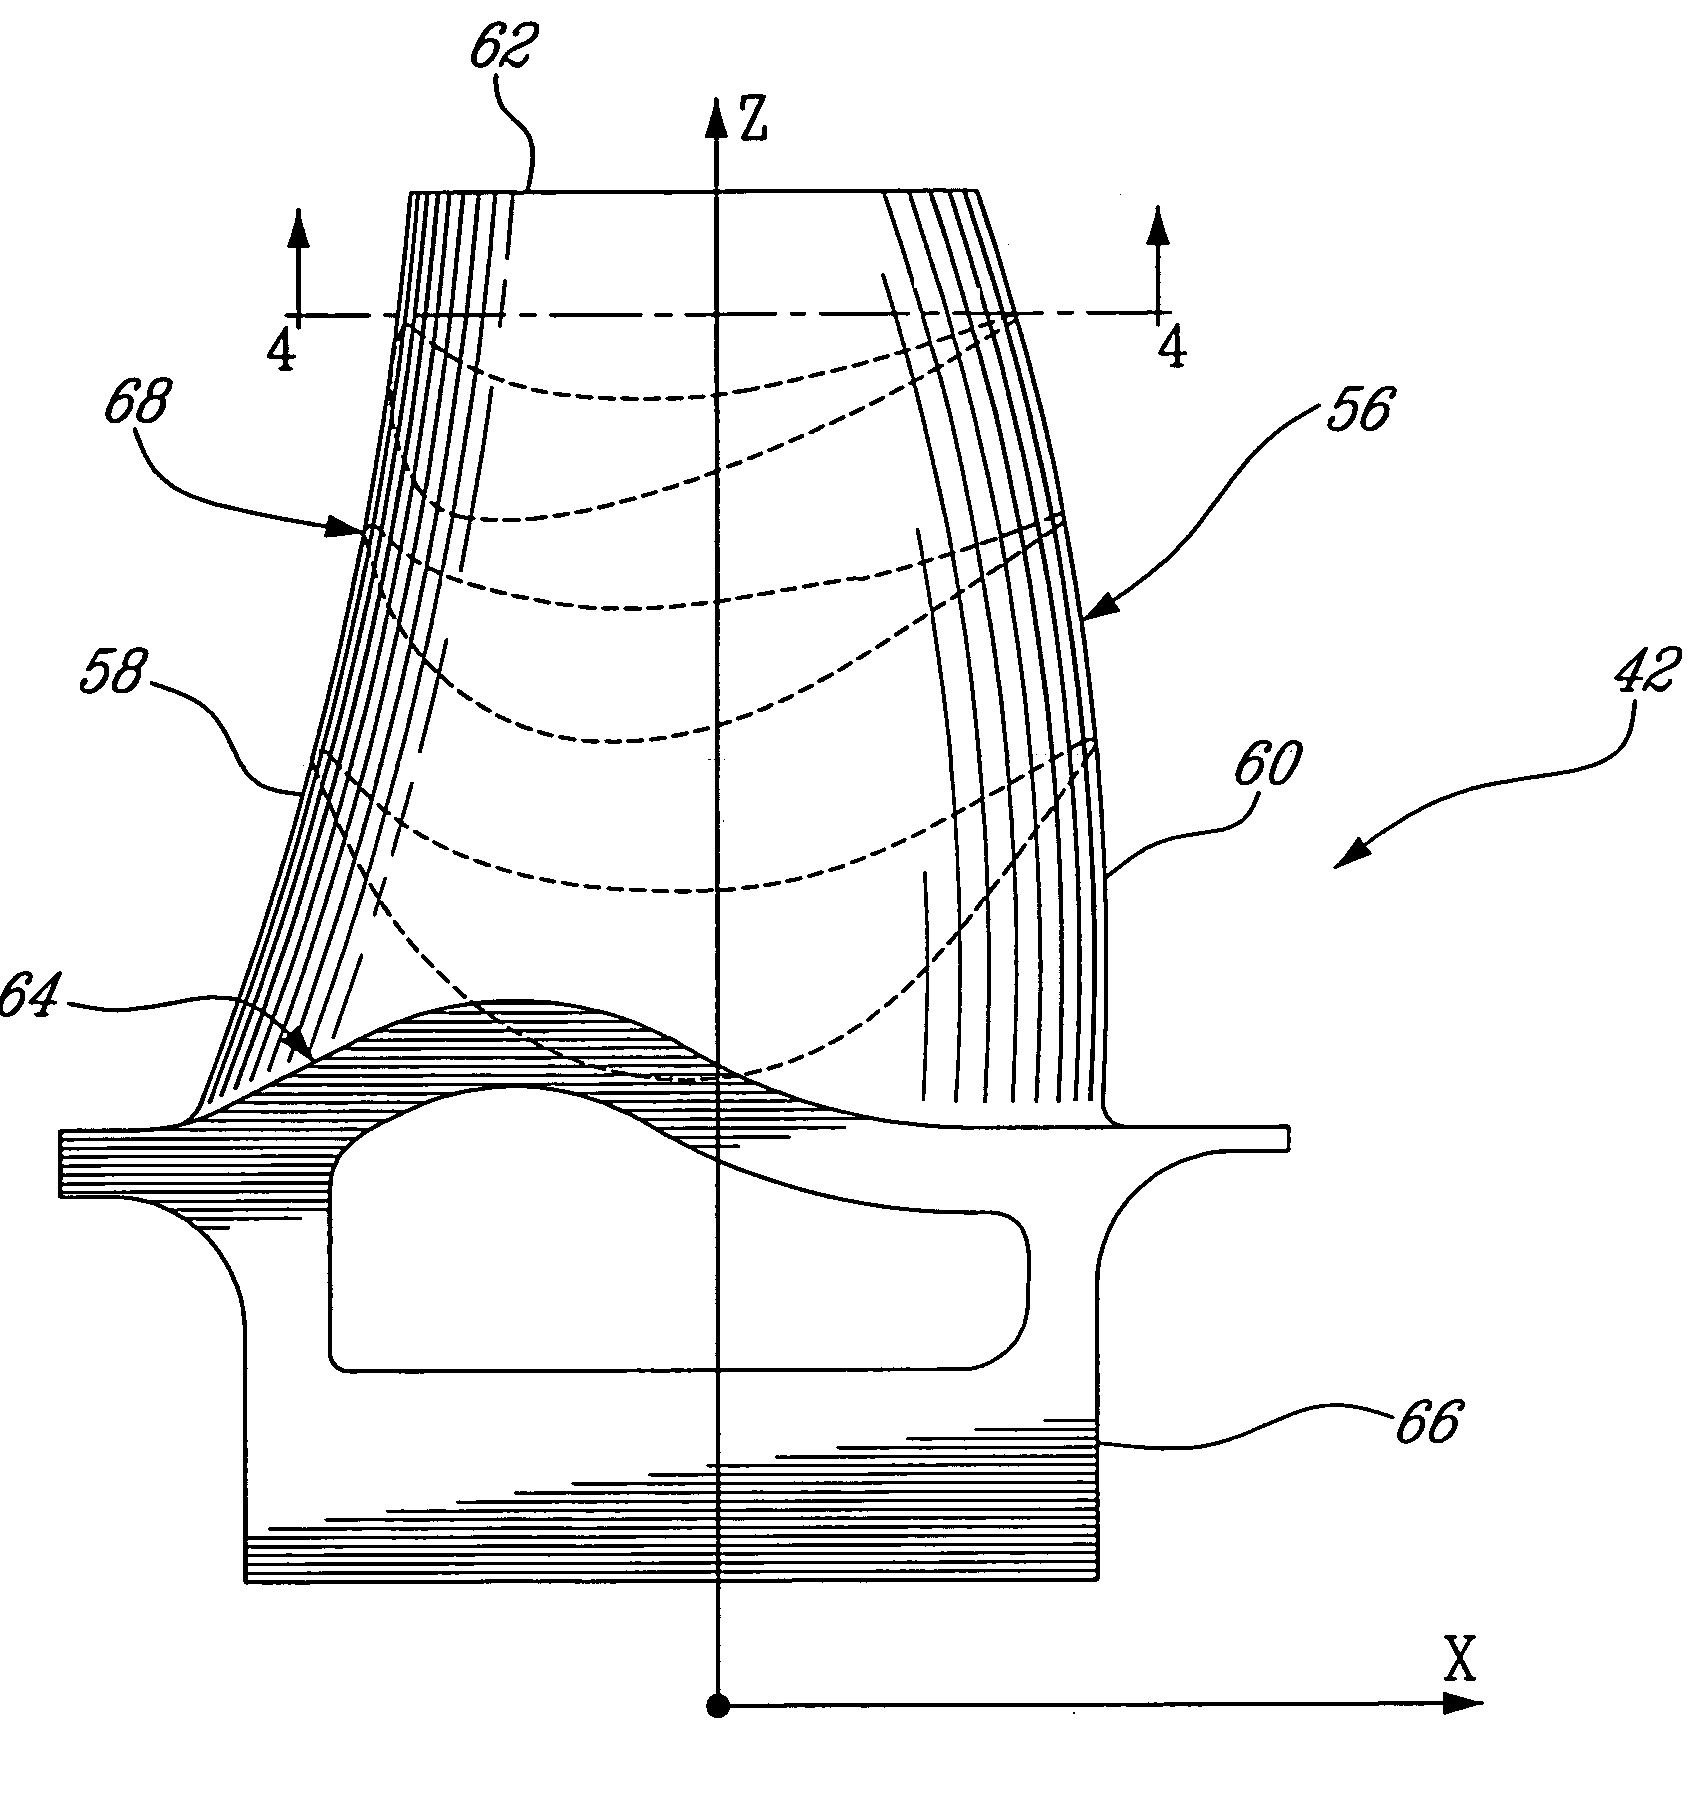 HP turbine blade airfoil profile